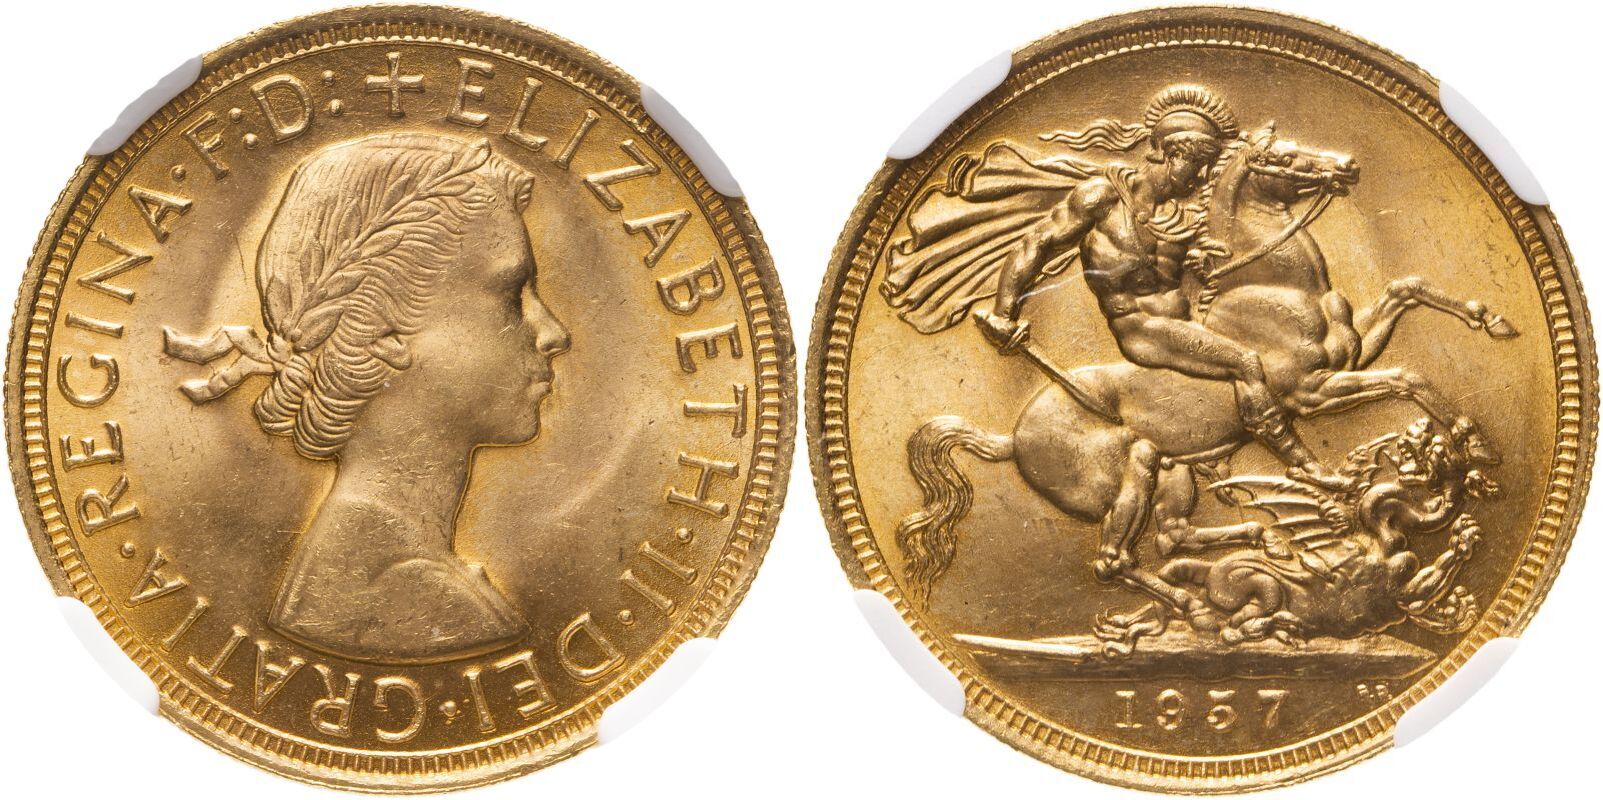 Lot 78 | United Kingdom Elizabeth II 1957 Gold Sovereign Equal-finest NGC MS 66 #5787908-004 (AGW=0.2355 oz.)